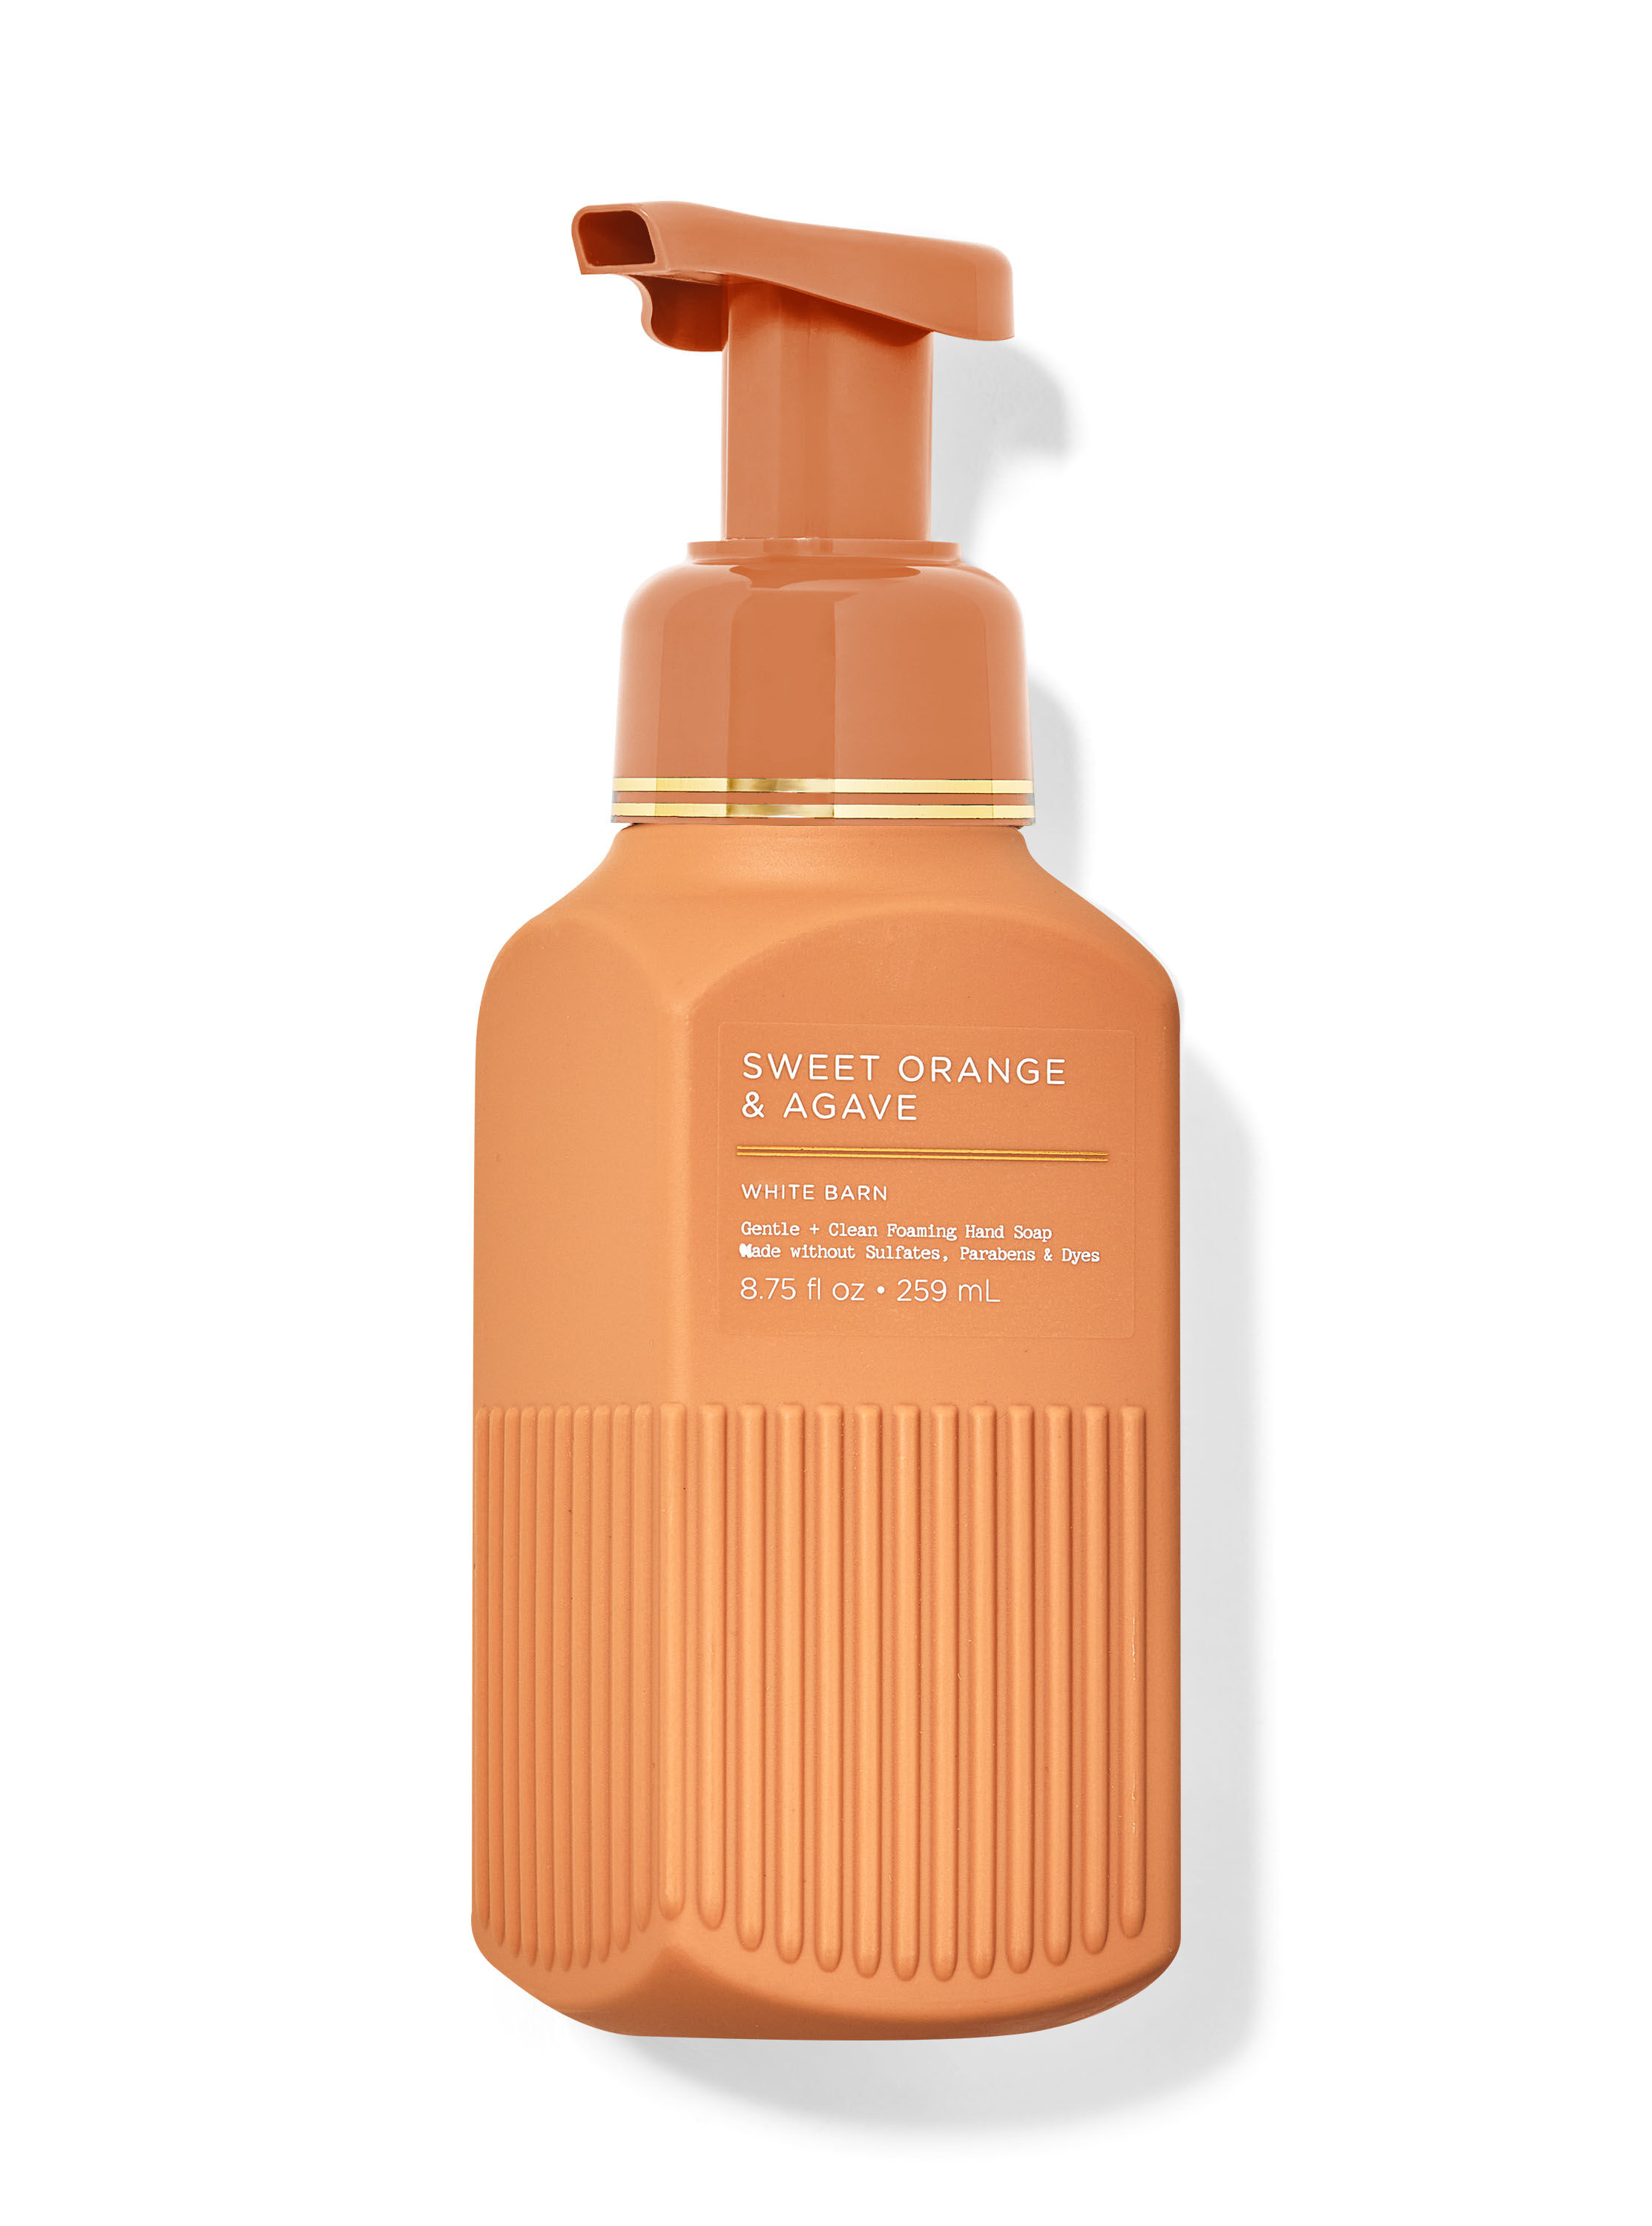 Sweet Orange & Agave Gentle & Clean Foaming Hand Soap